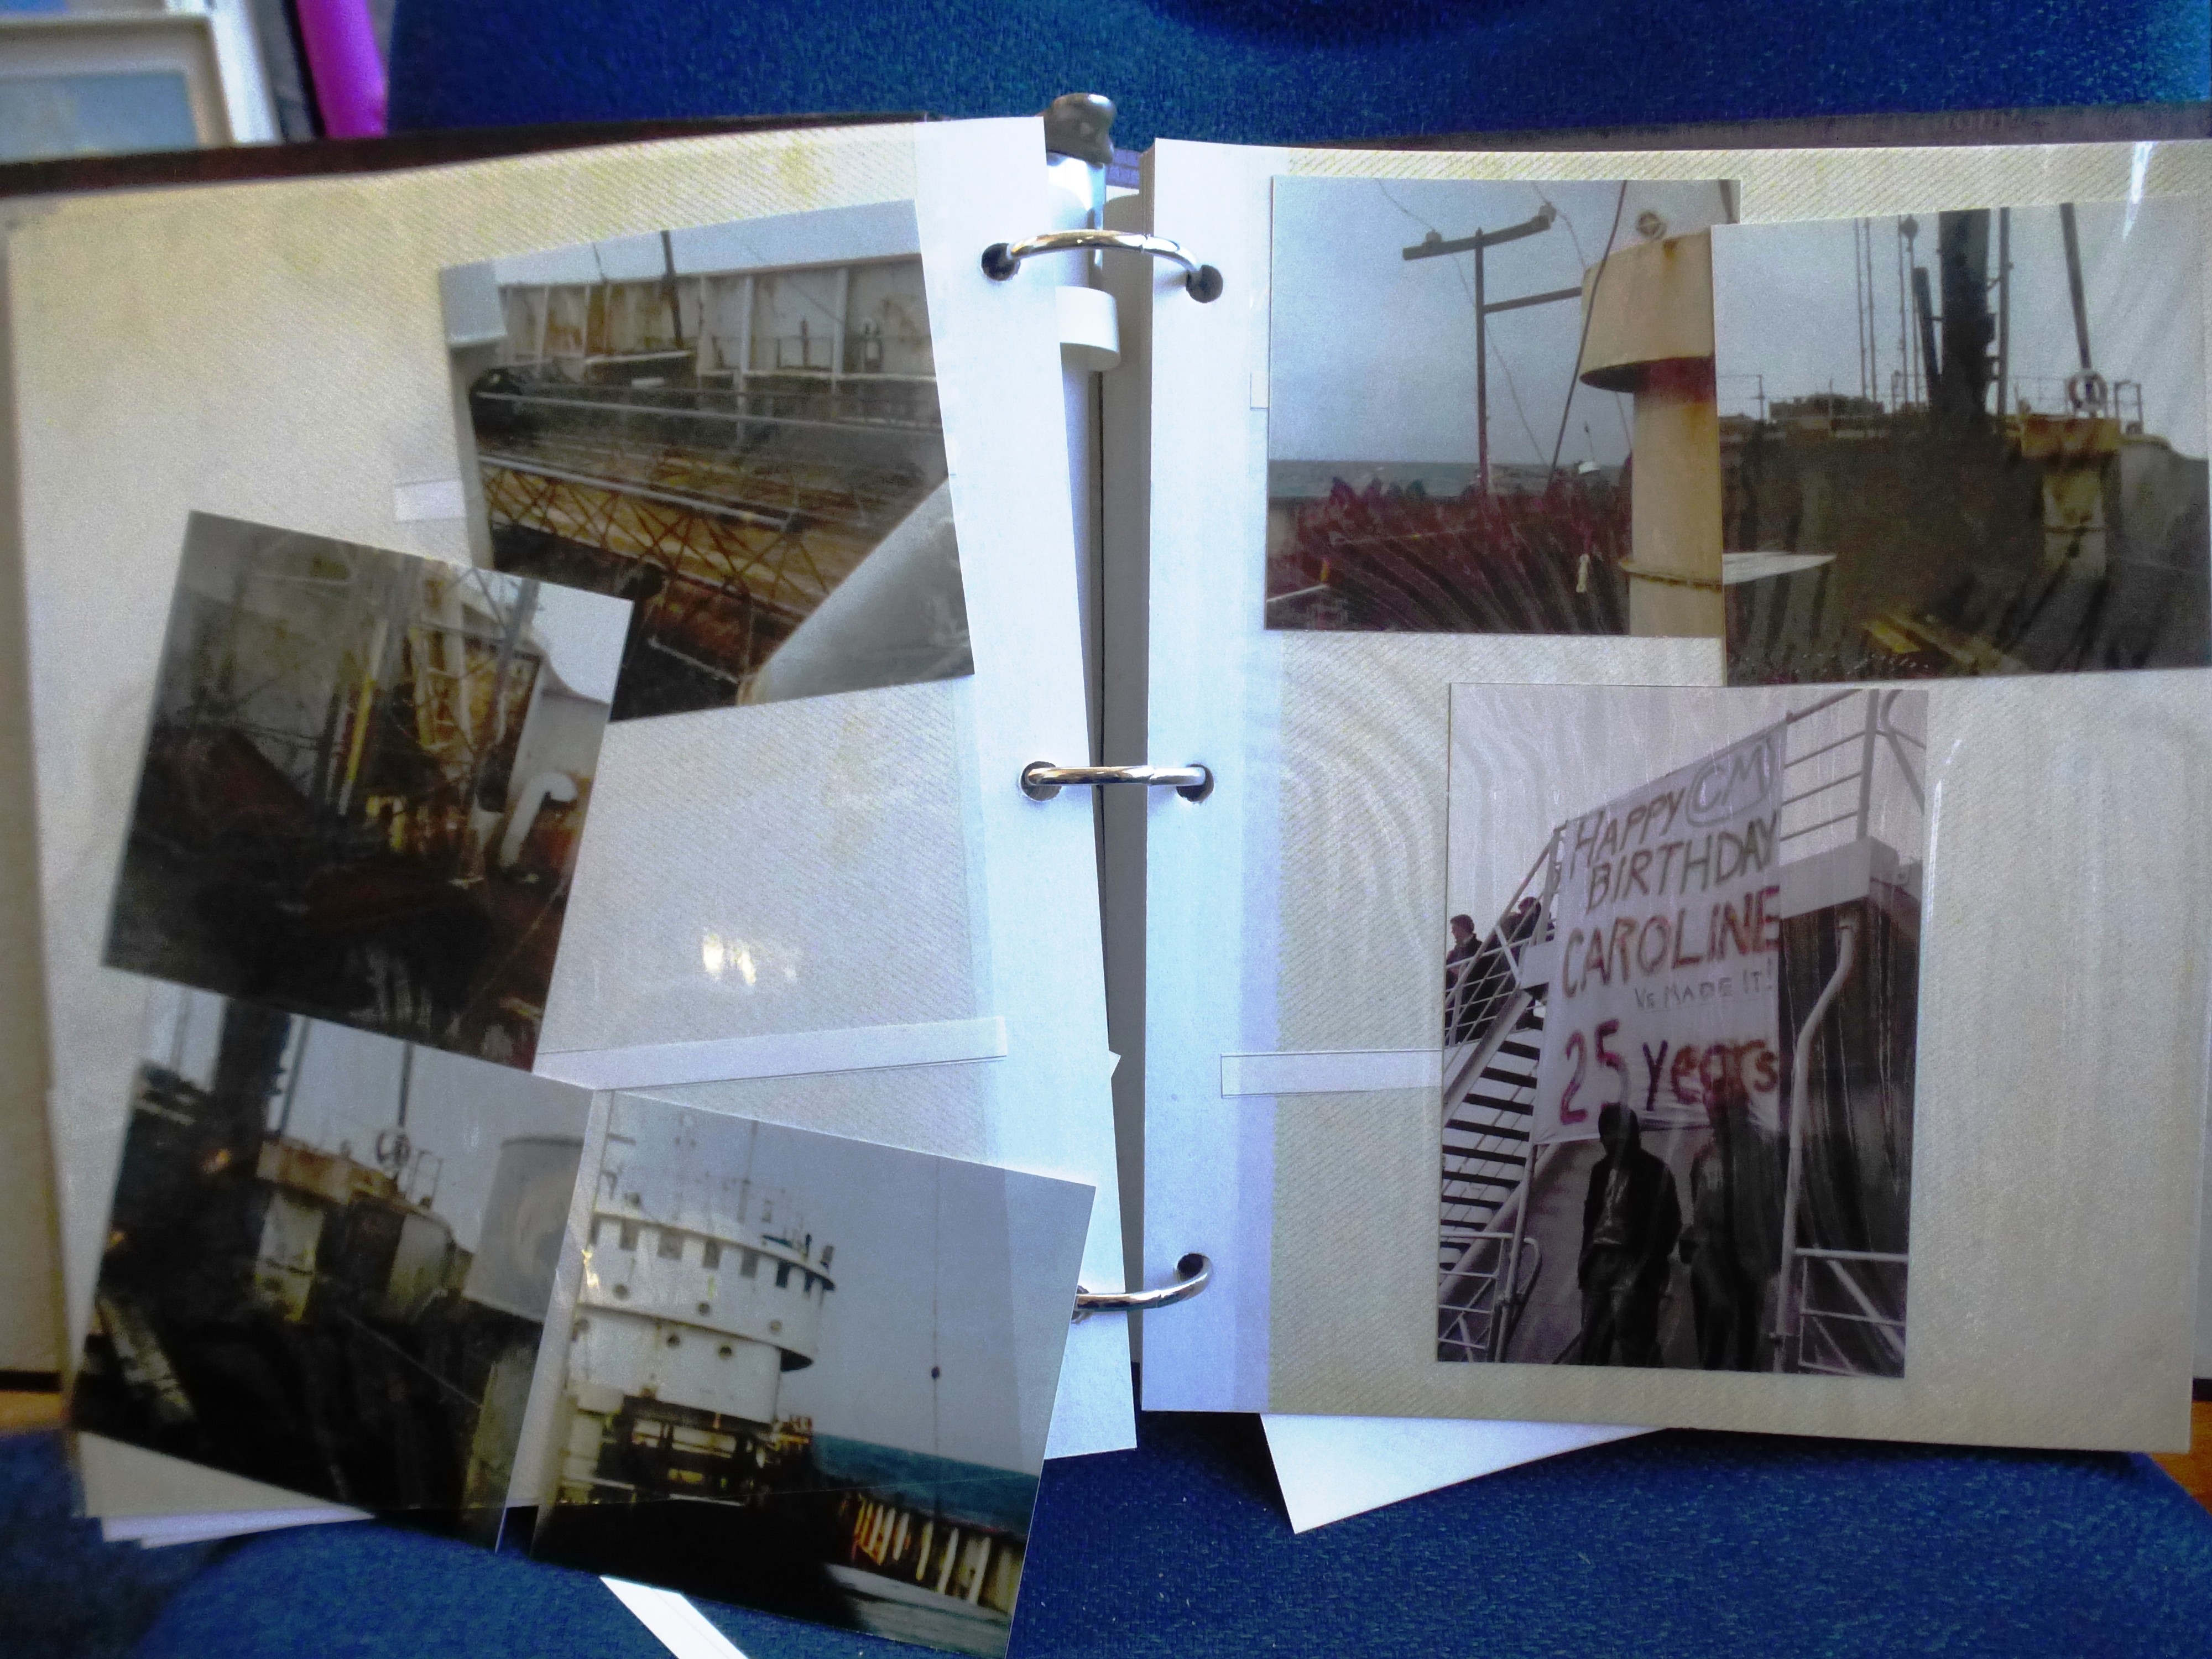 RADIO CAROLINE PHOTOGRAPH ALBUM WITH PHOTOGRAPHS OF THE SHIP, INTERIOR, DJS, EQUIPMENT, MAINTENANCE, - Image 18 of 28